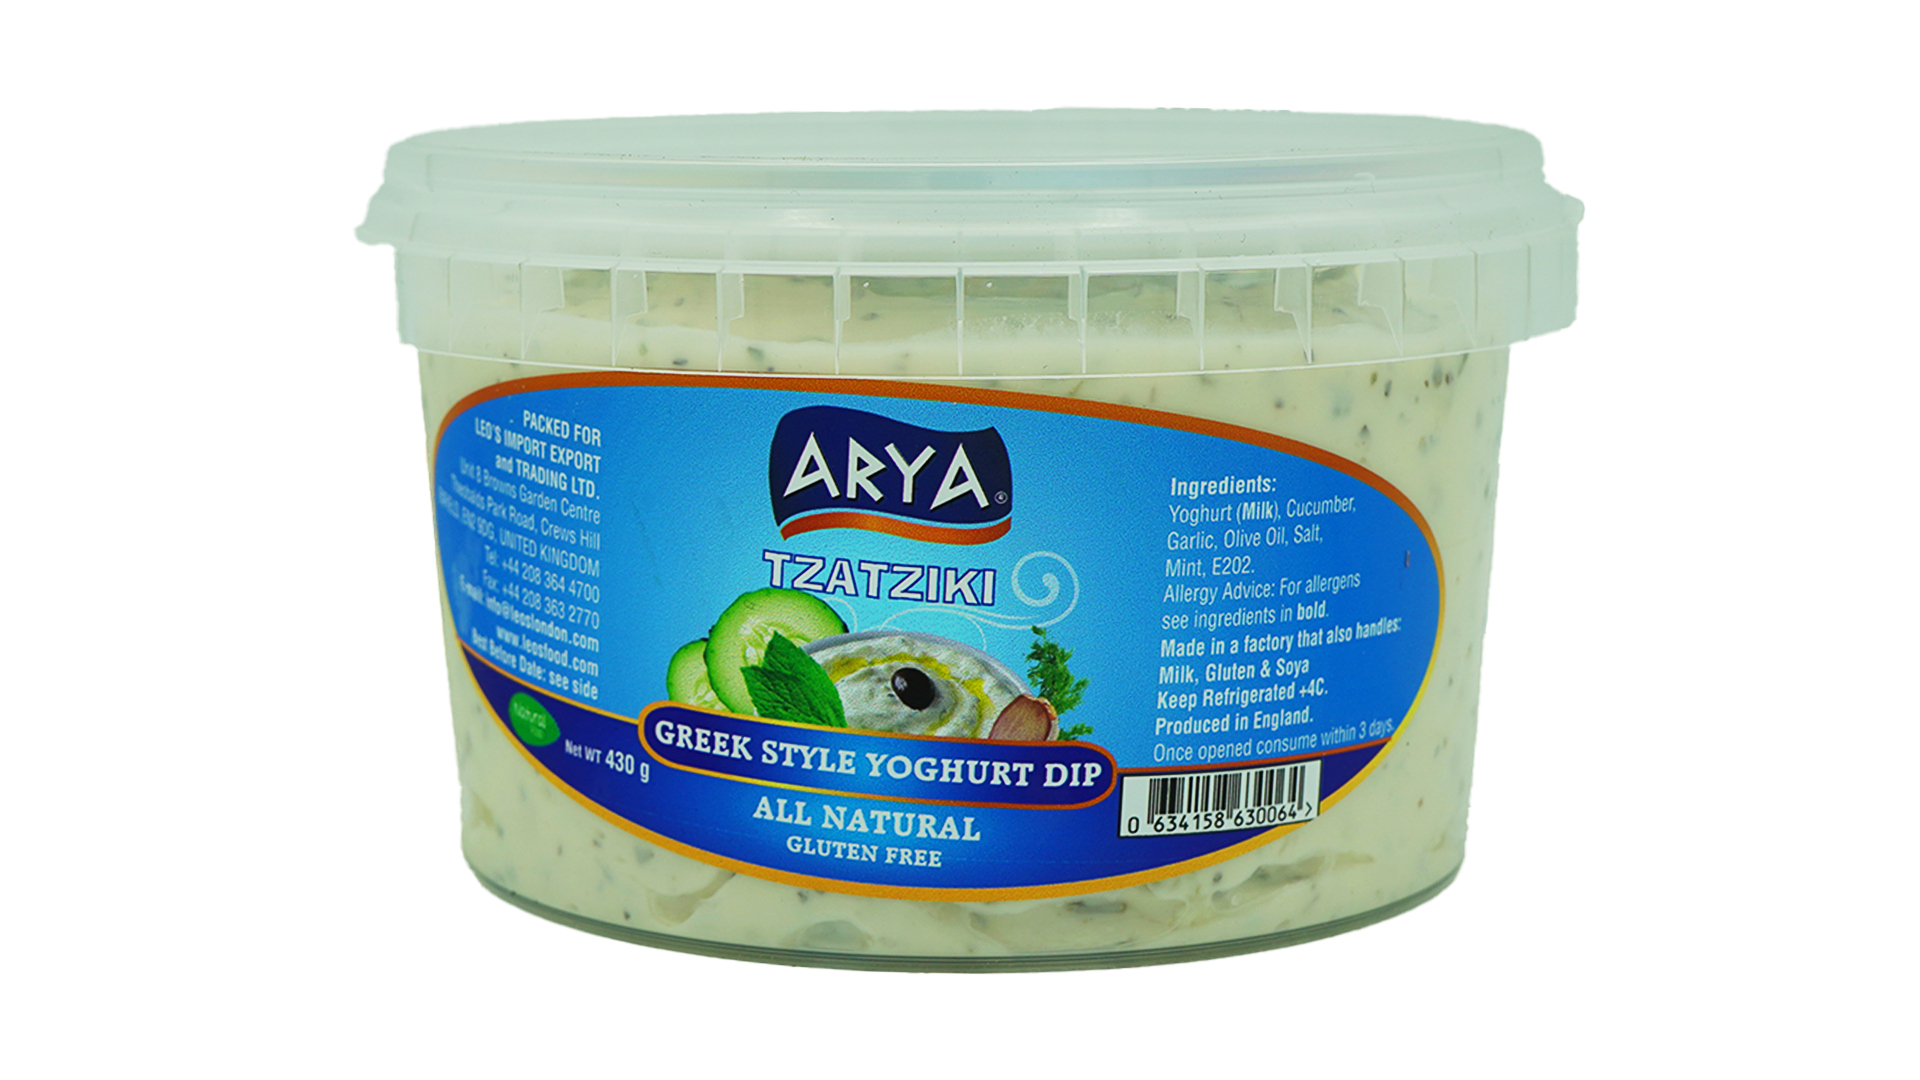 Arya tzatziki greek style yoghurt dip 430g 2